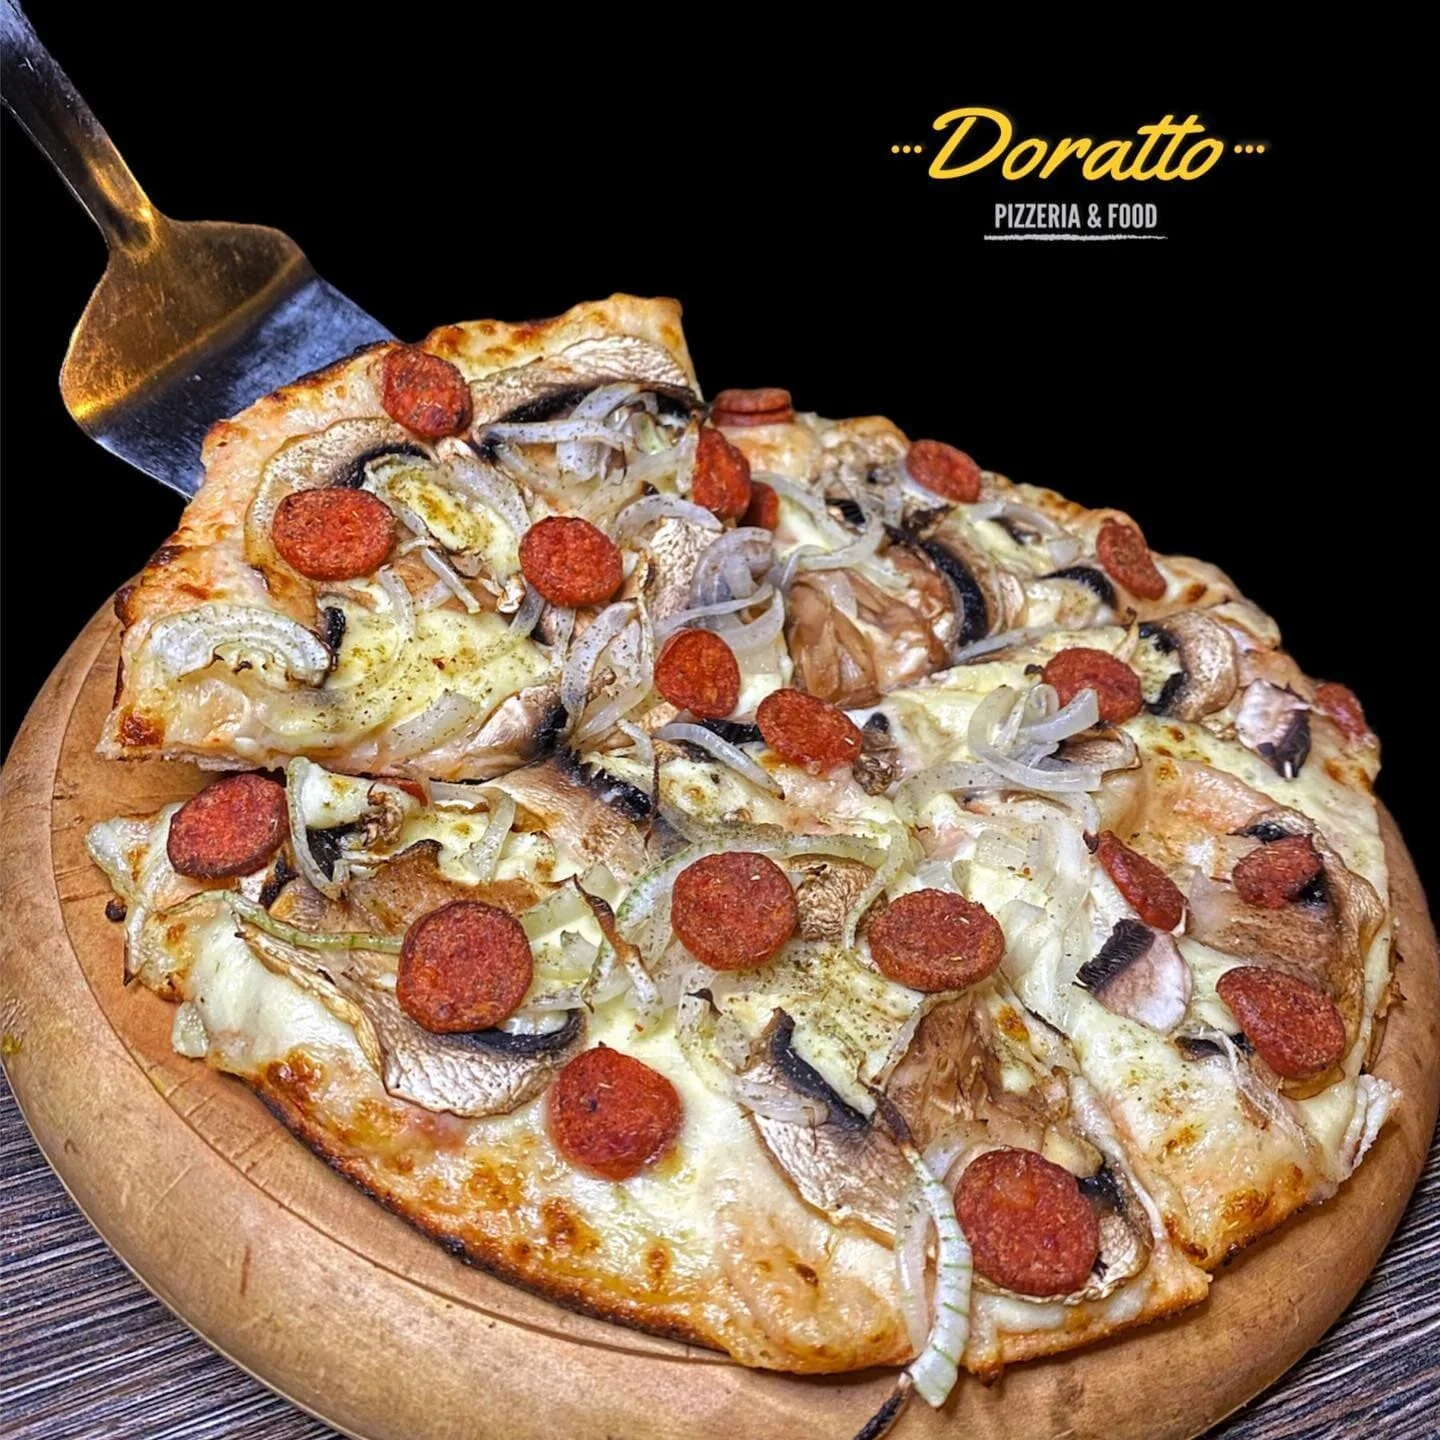 Restaurante-doratto-pizzeria-food-26176